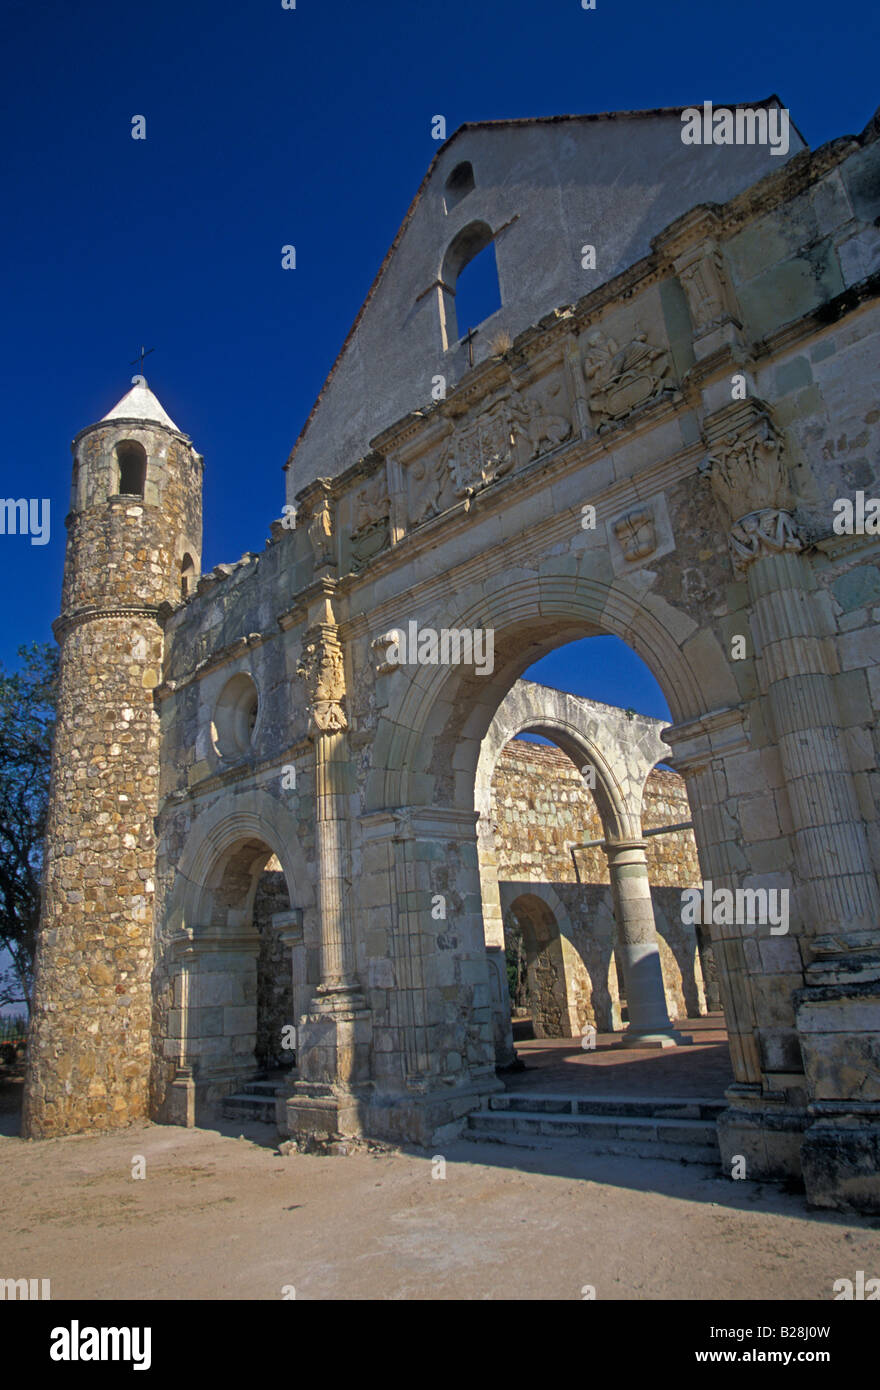 roofless basilica, basilica, Dominican monastery, Dominican convent, Dominican order, Cuilapam de Guerrero, Oaxaca State, Mexico Stock Photo